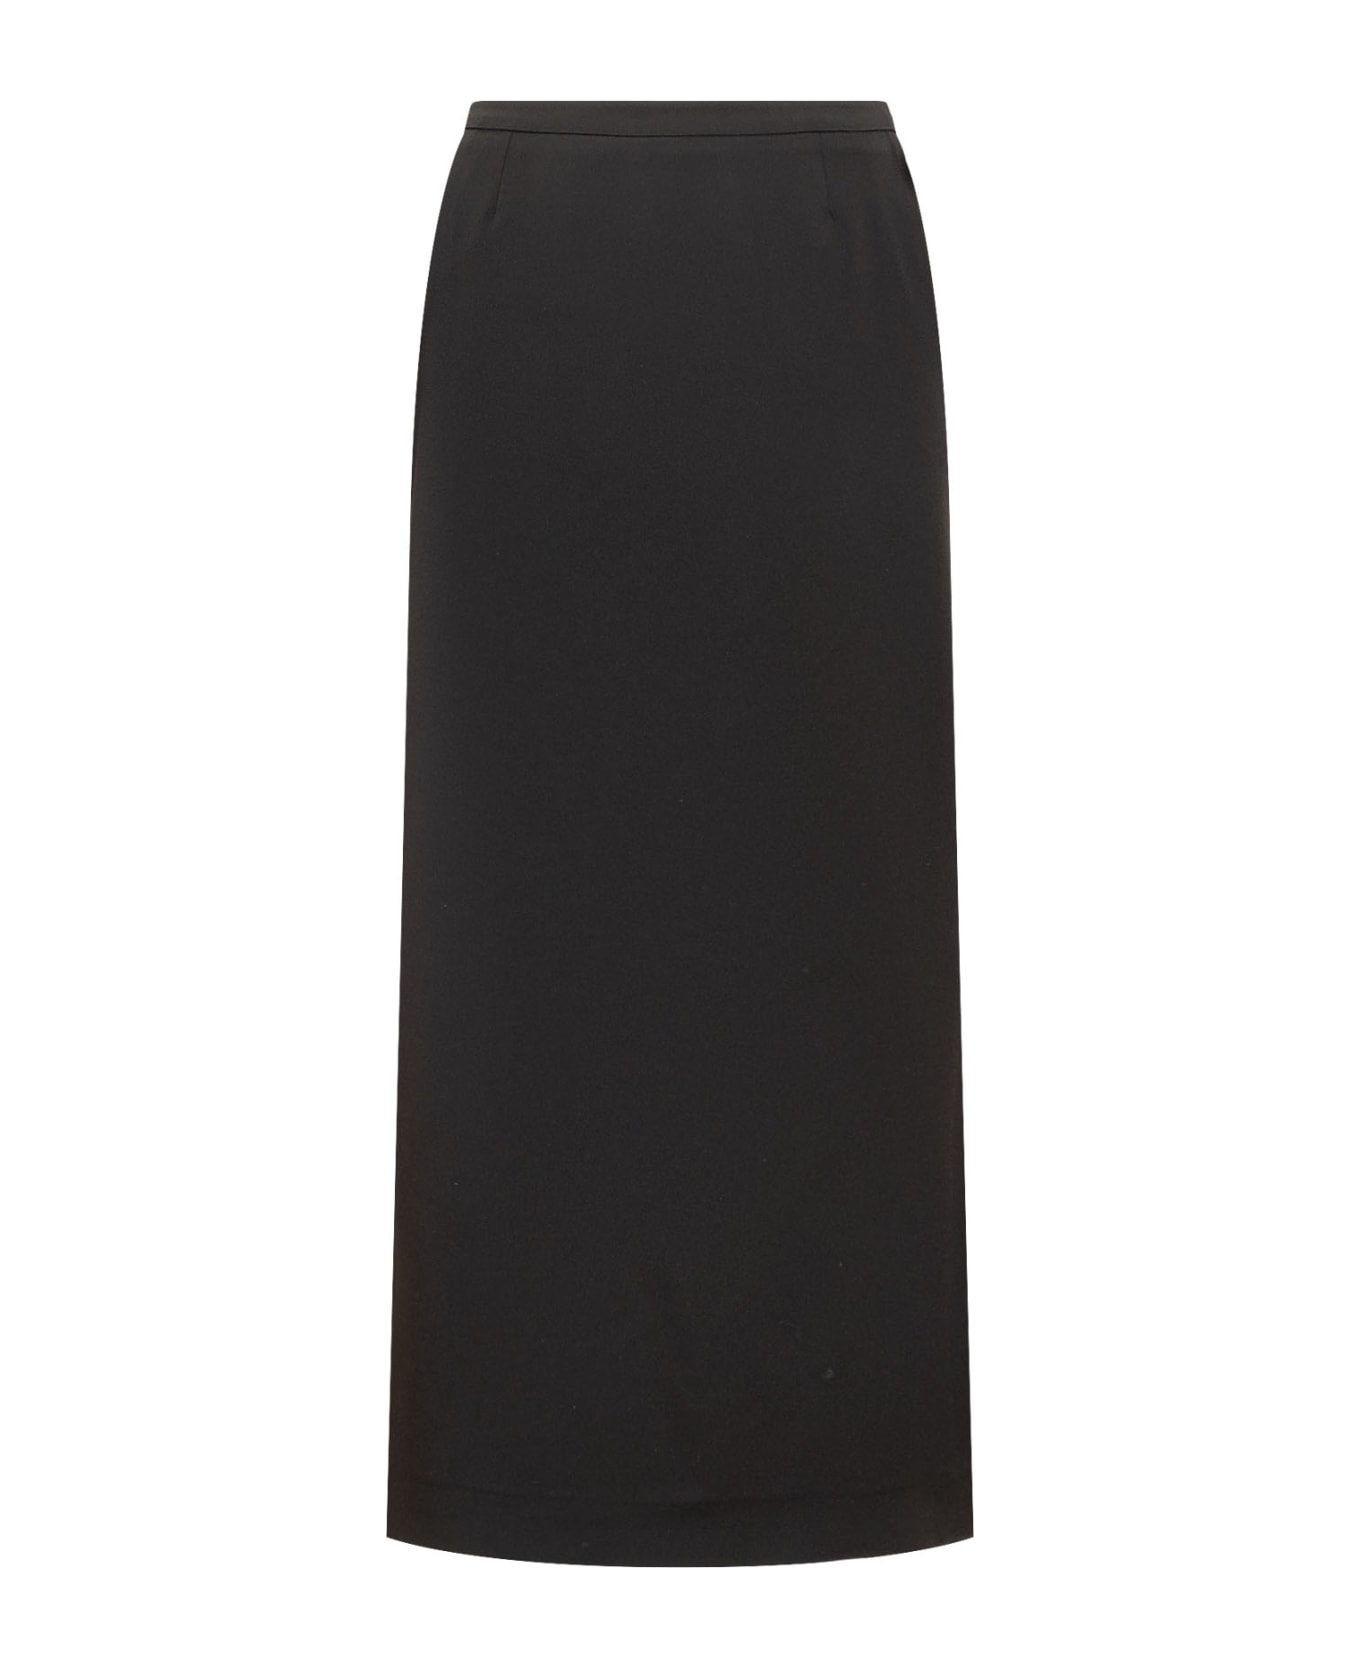 Dolce & Gabbana Longuette In Technical Fabric - NERO スカート